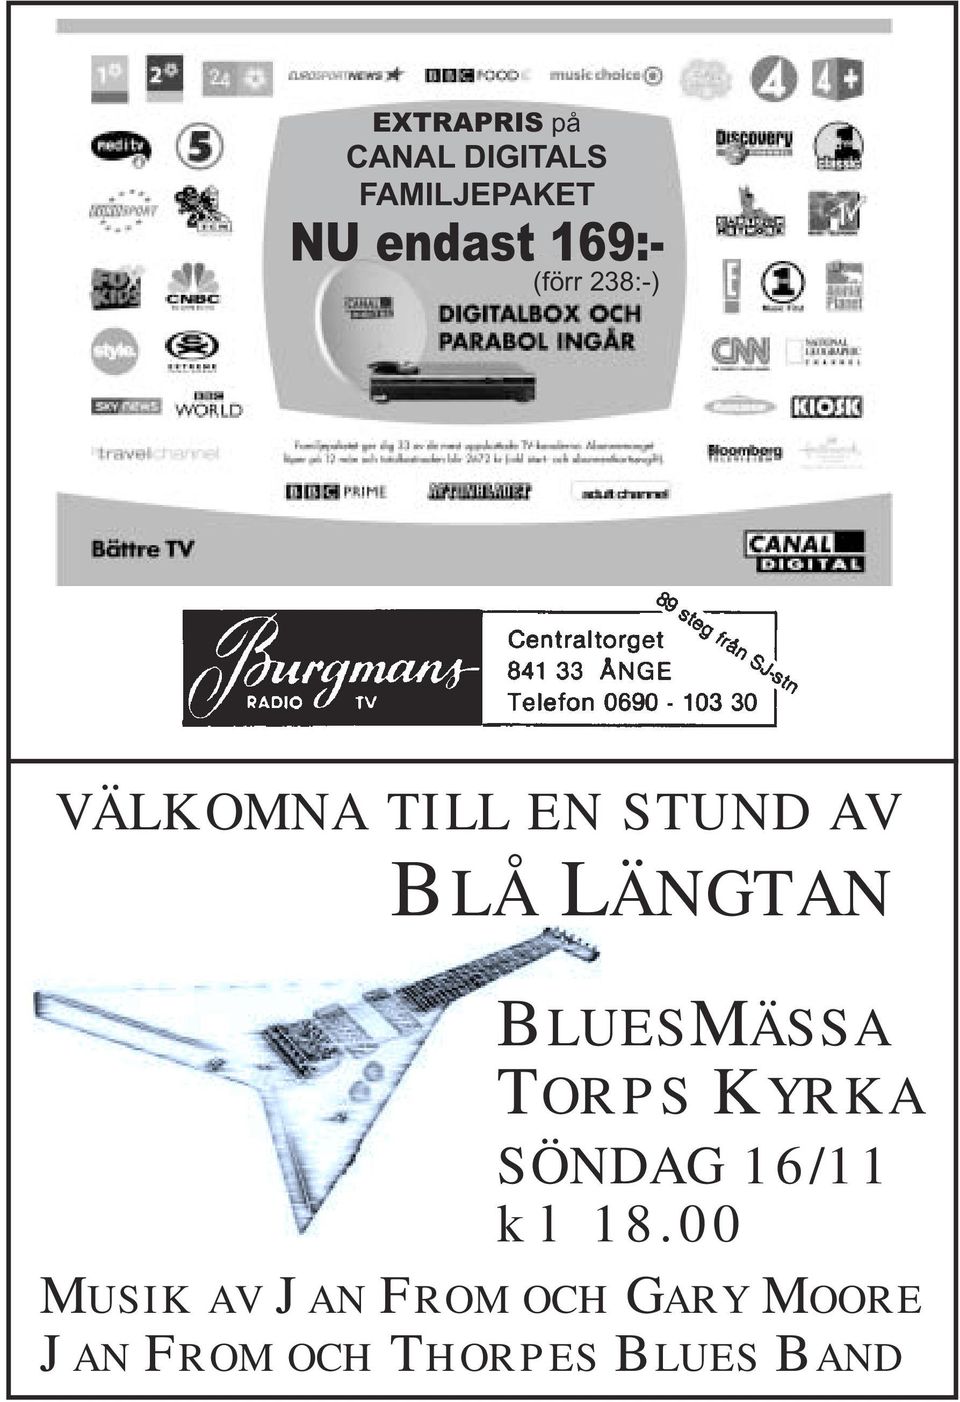 LÄNGTAN BLUESMÄSSA TORPS KYRKA SÖNDAG 16/11 kl 18.